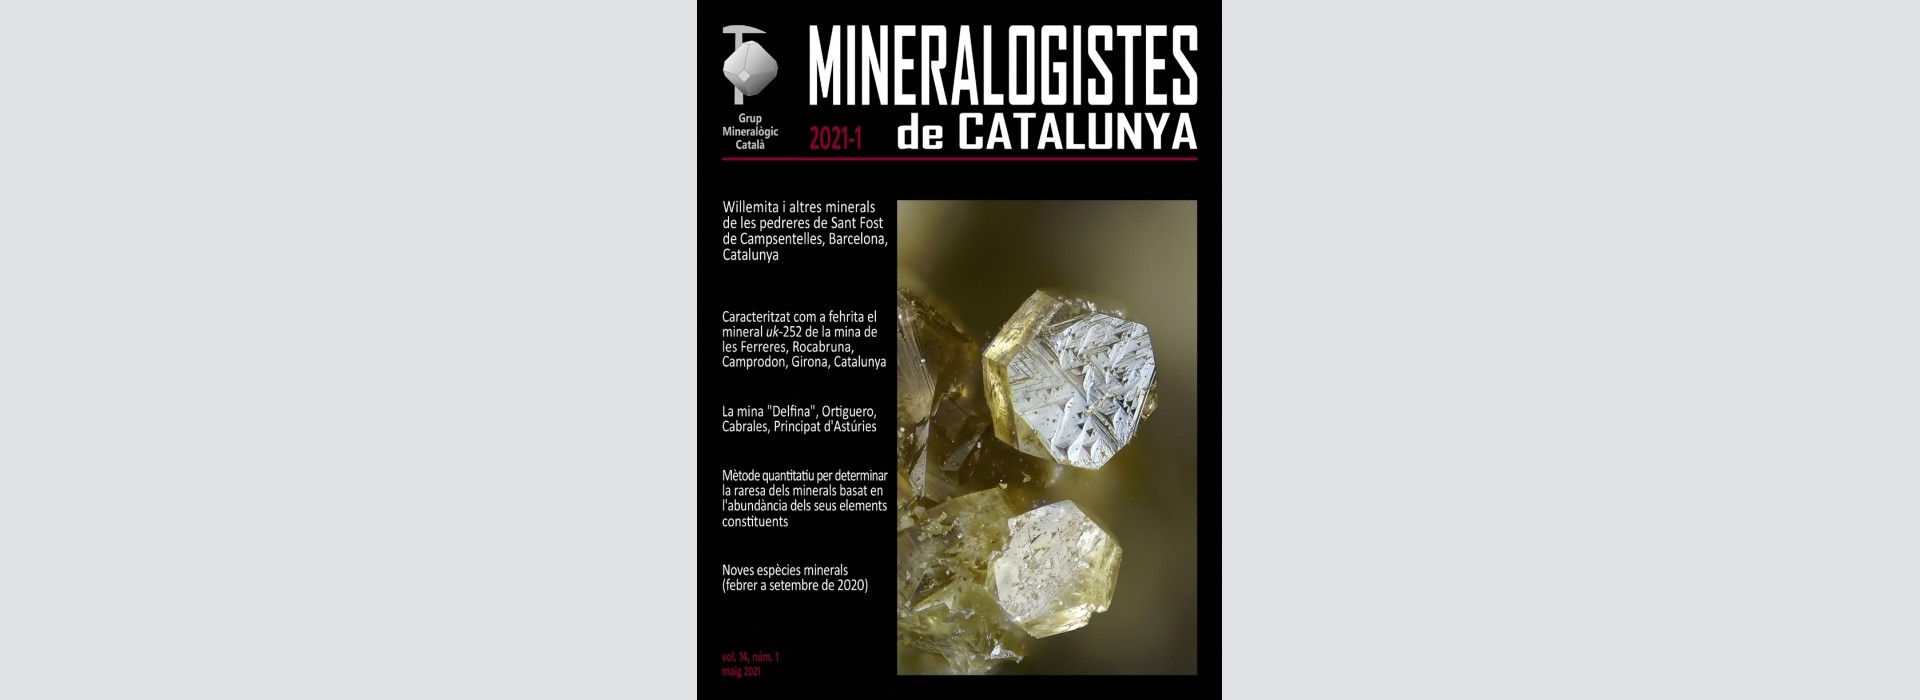 Último número impreso de nuestra revista en catalán <i>Mineralogistes de Catalunya</i>